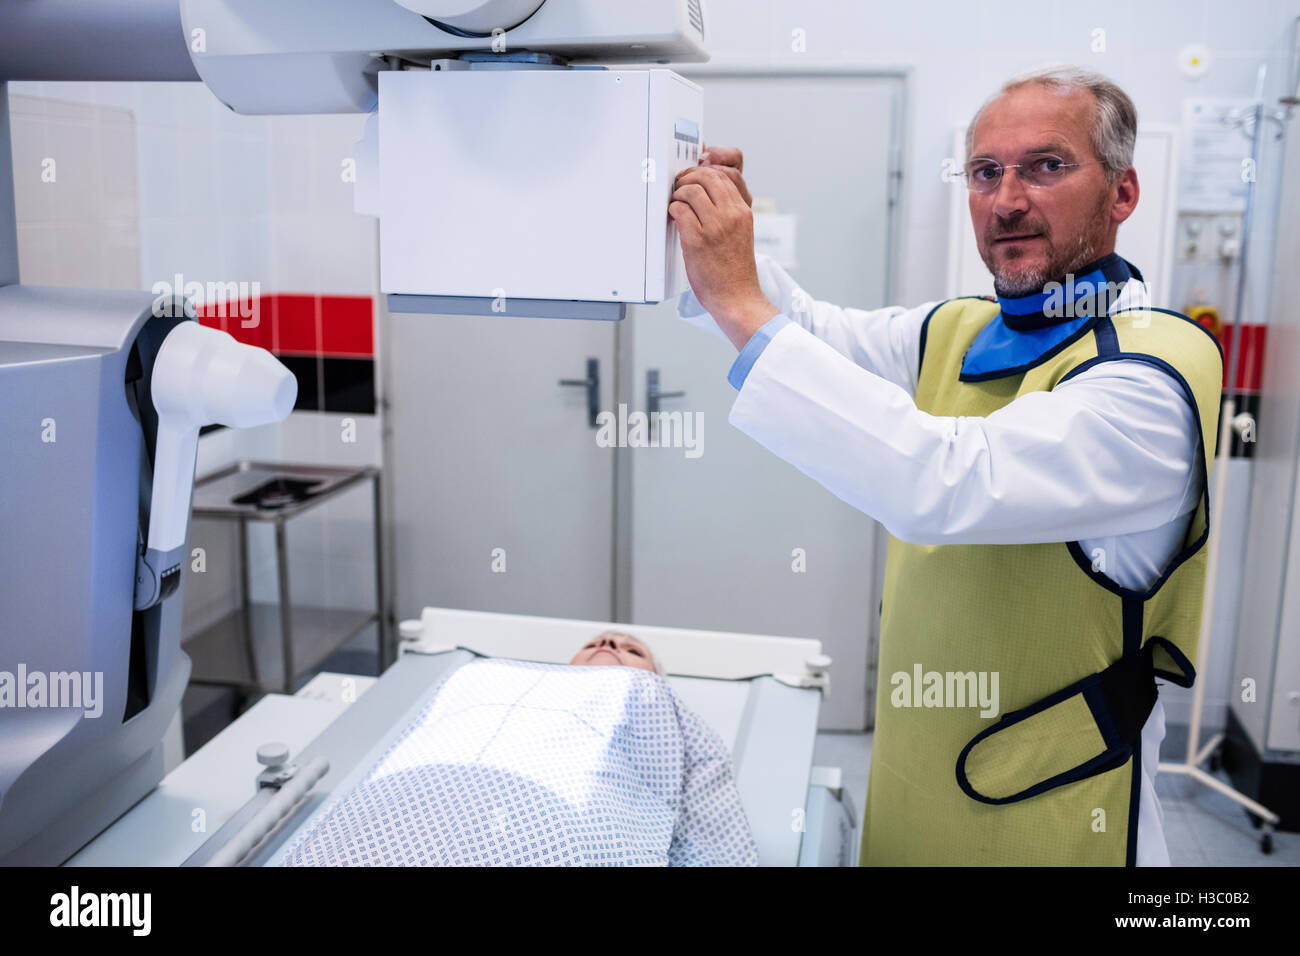 Doctor using x-ray machine to examine patient Stock Photo